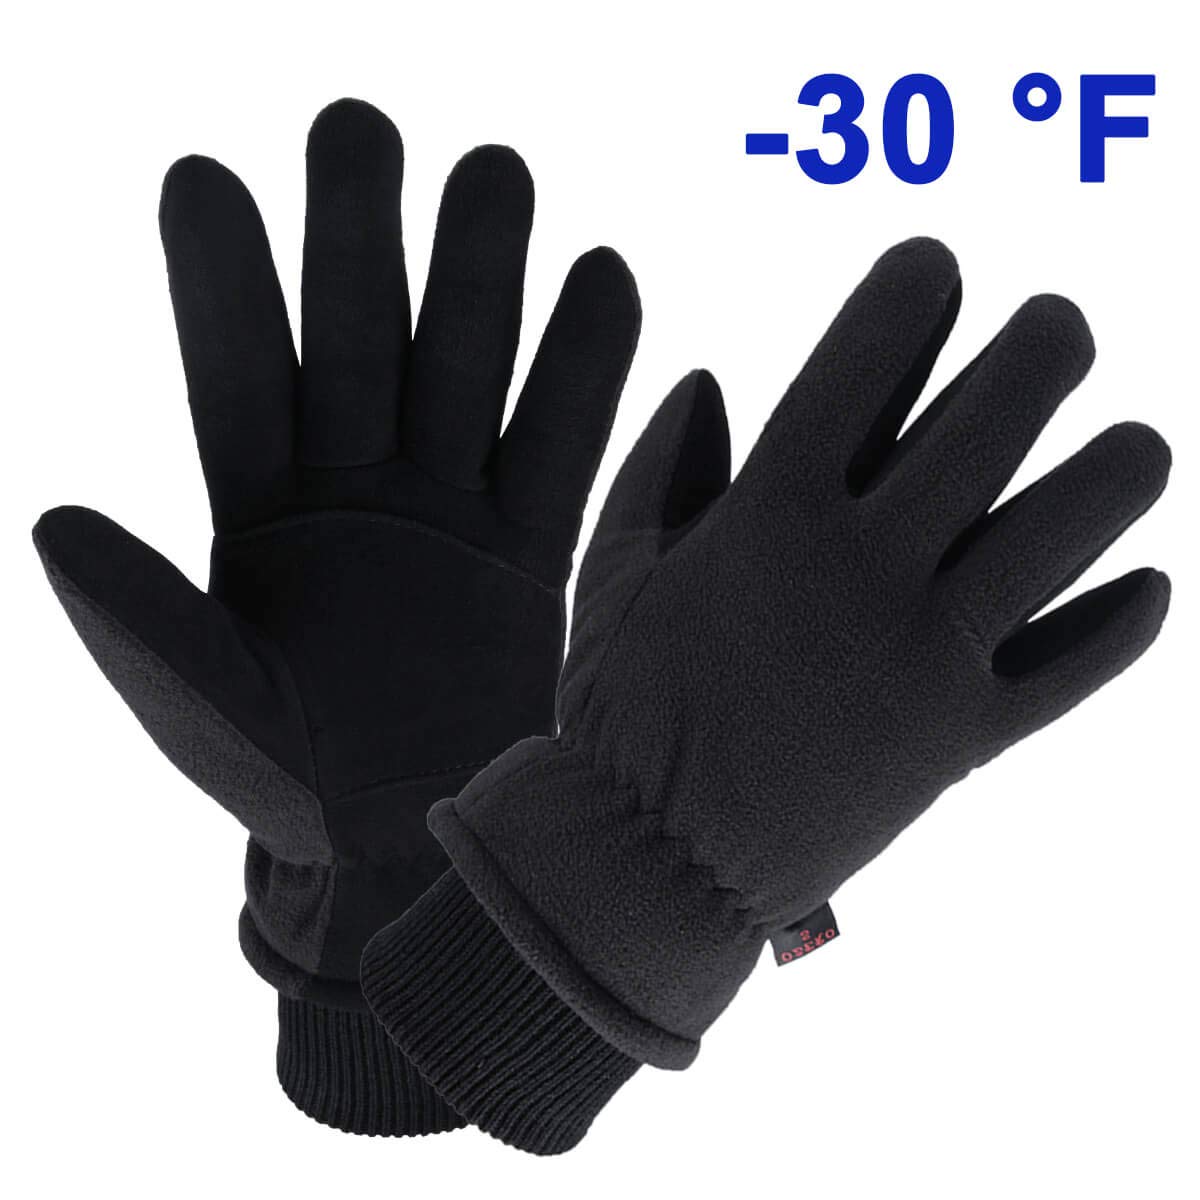 OZERO Winter Women's Cycling Gloves 